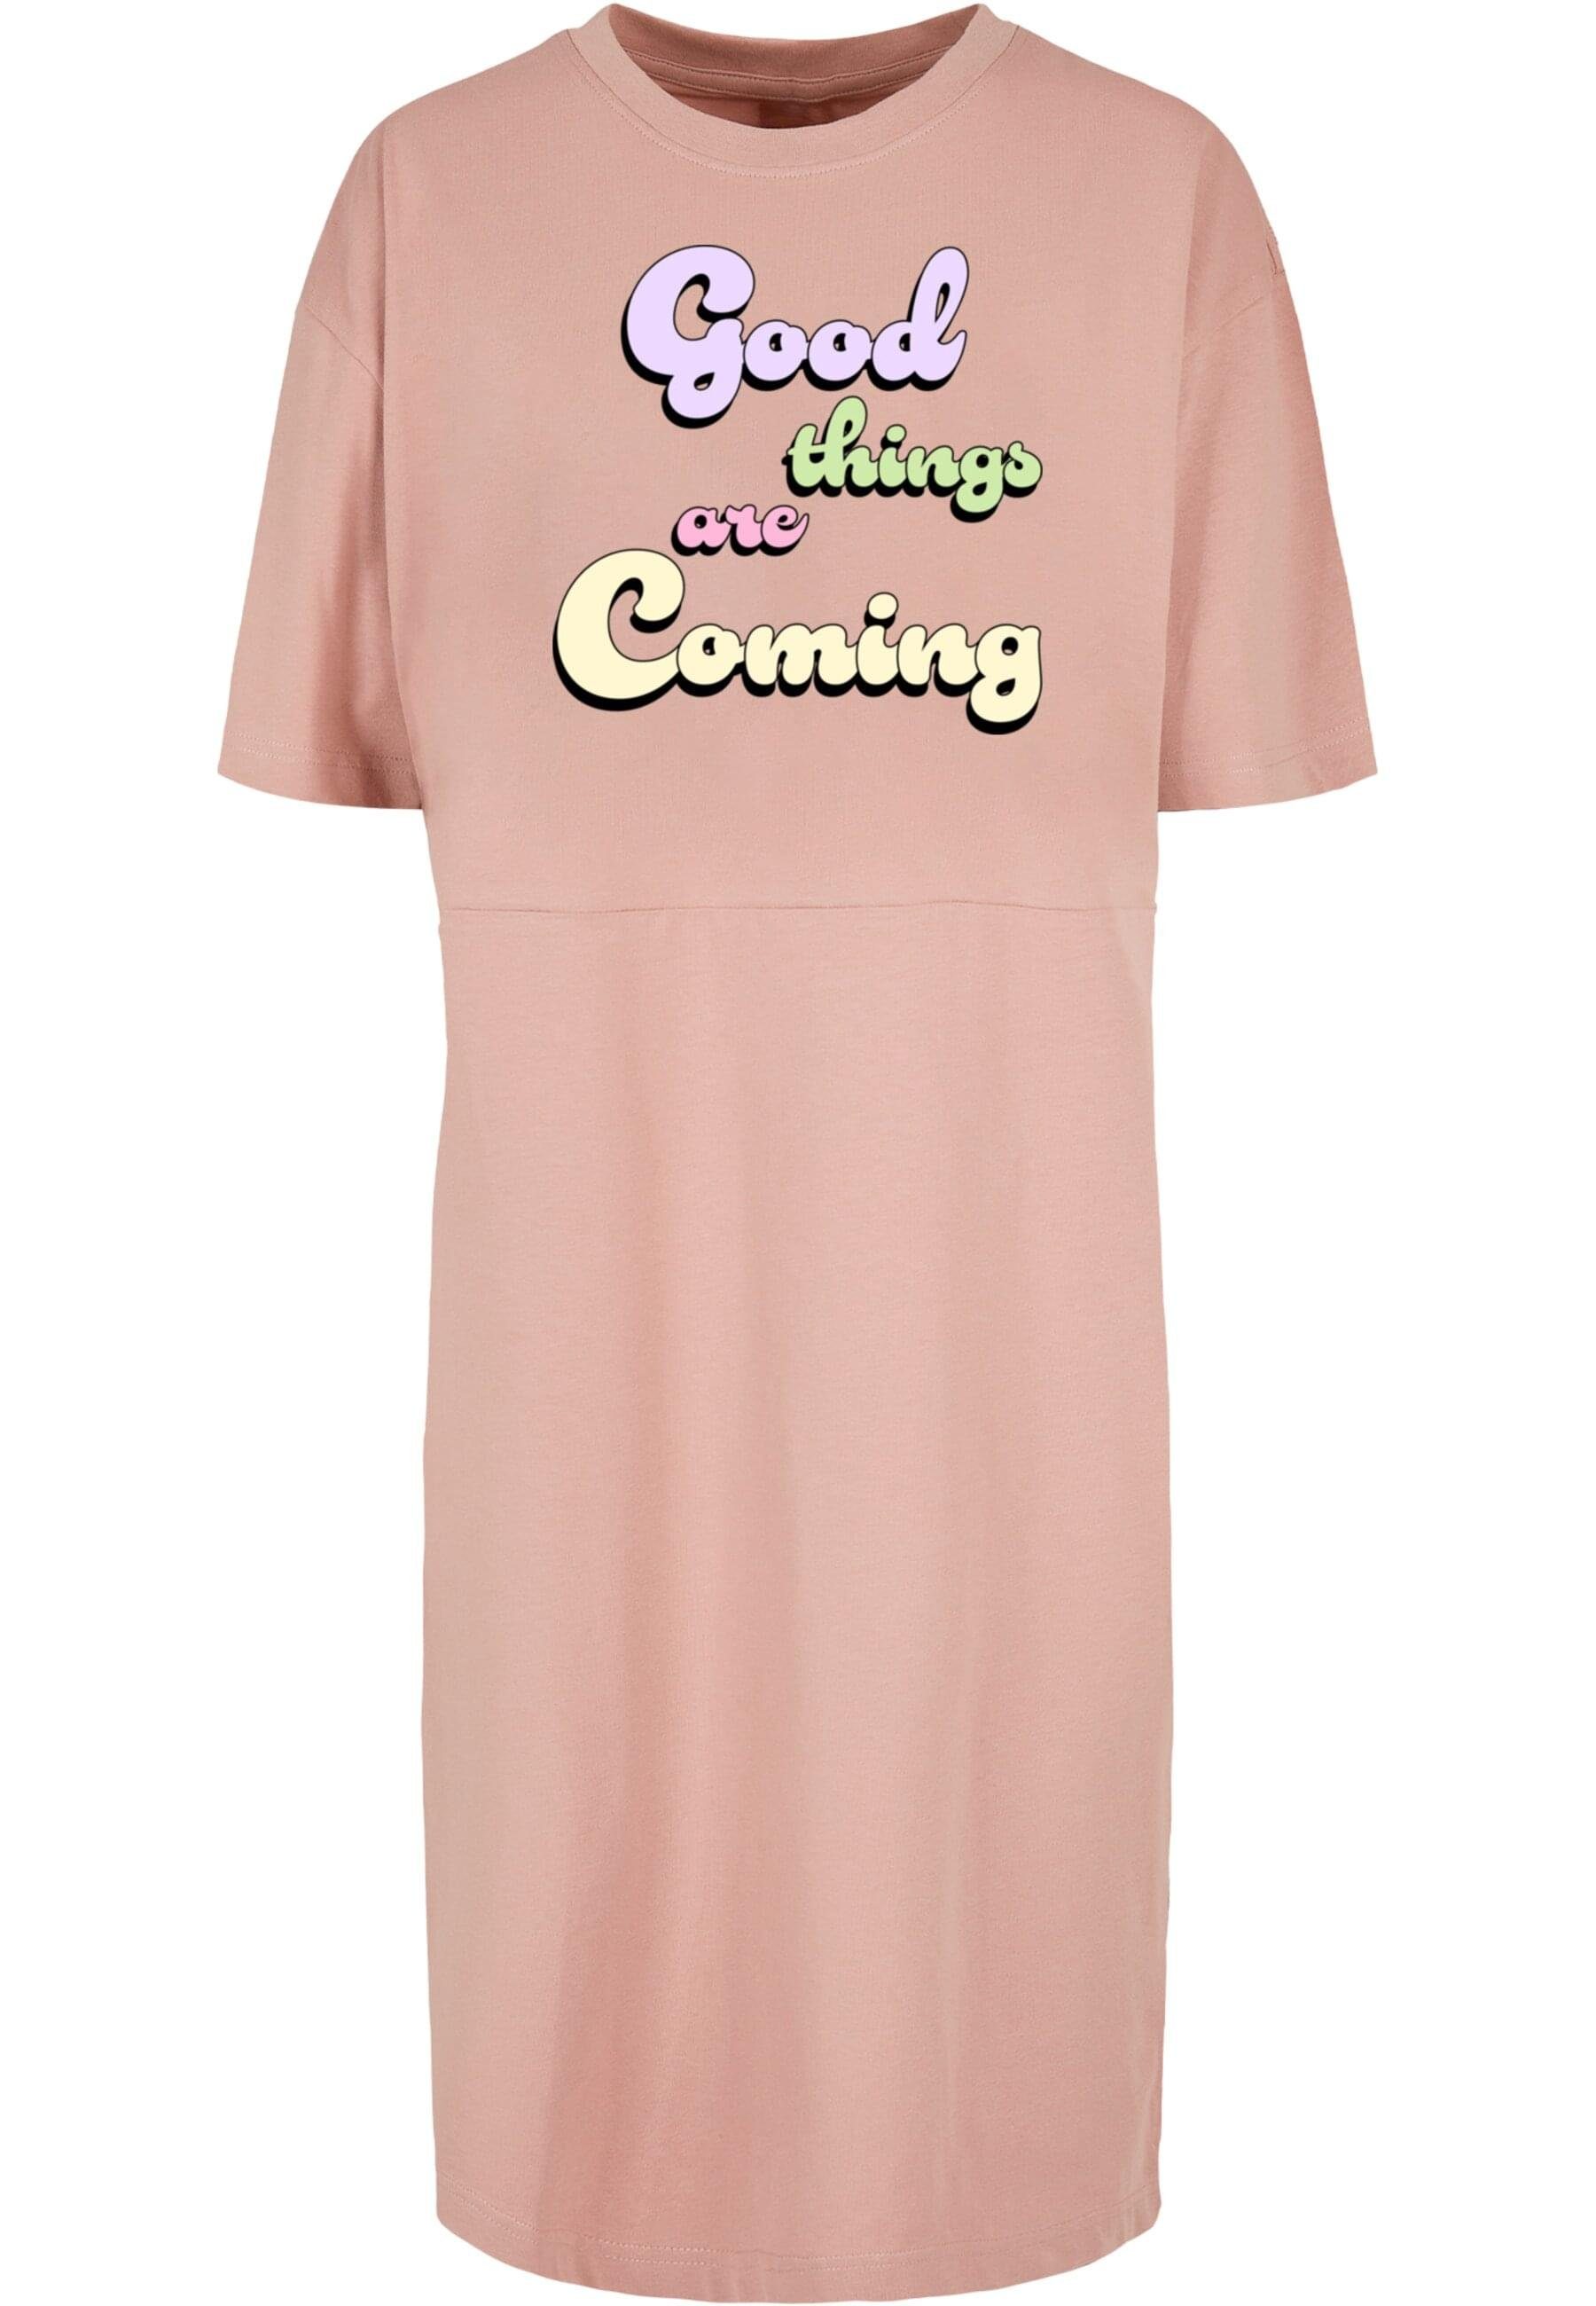 Tee (1- Damen Merchcode Oversized Ladies Things tlg) Good Dress Stillkleid Slit